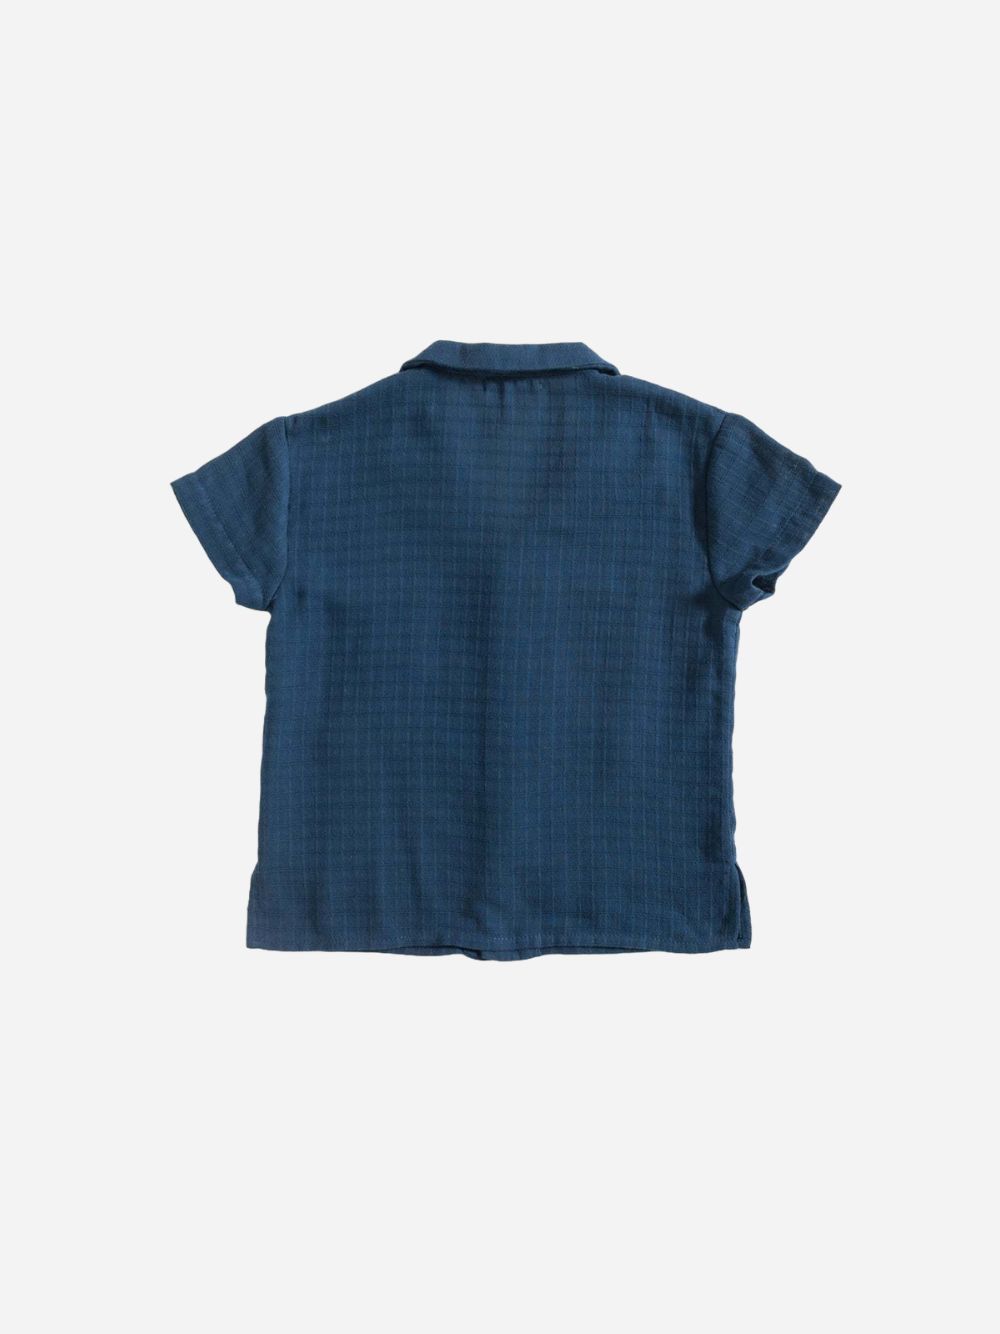 Shirt / Navy Gauze